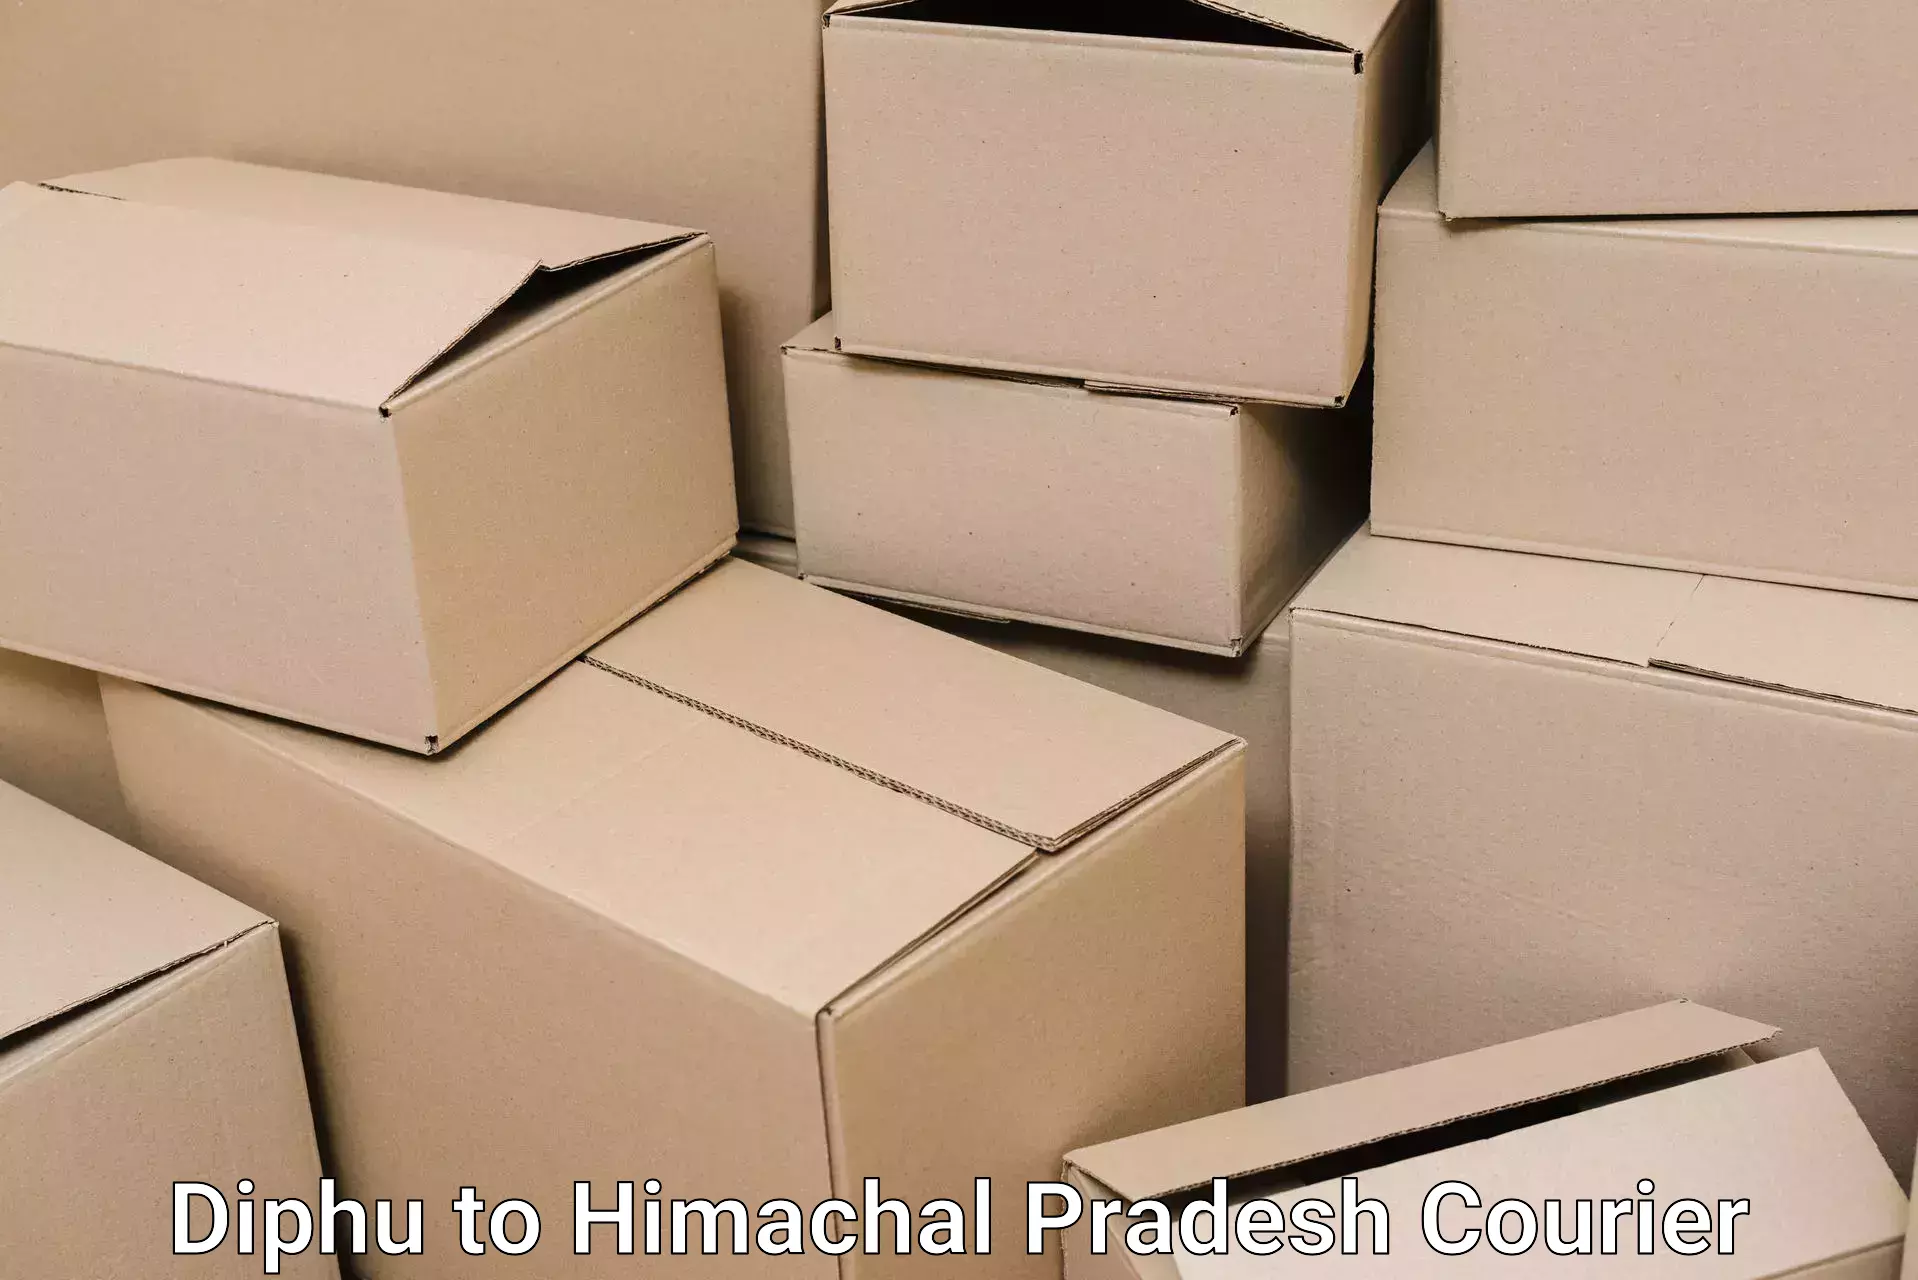 Professional moving company Diphu to Una Himachal Pradesh